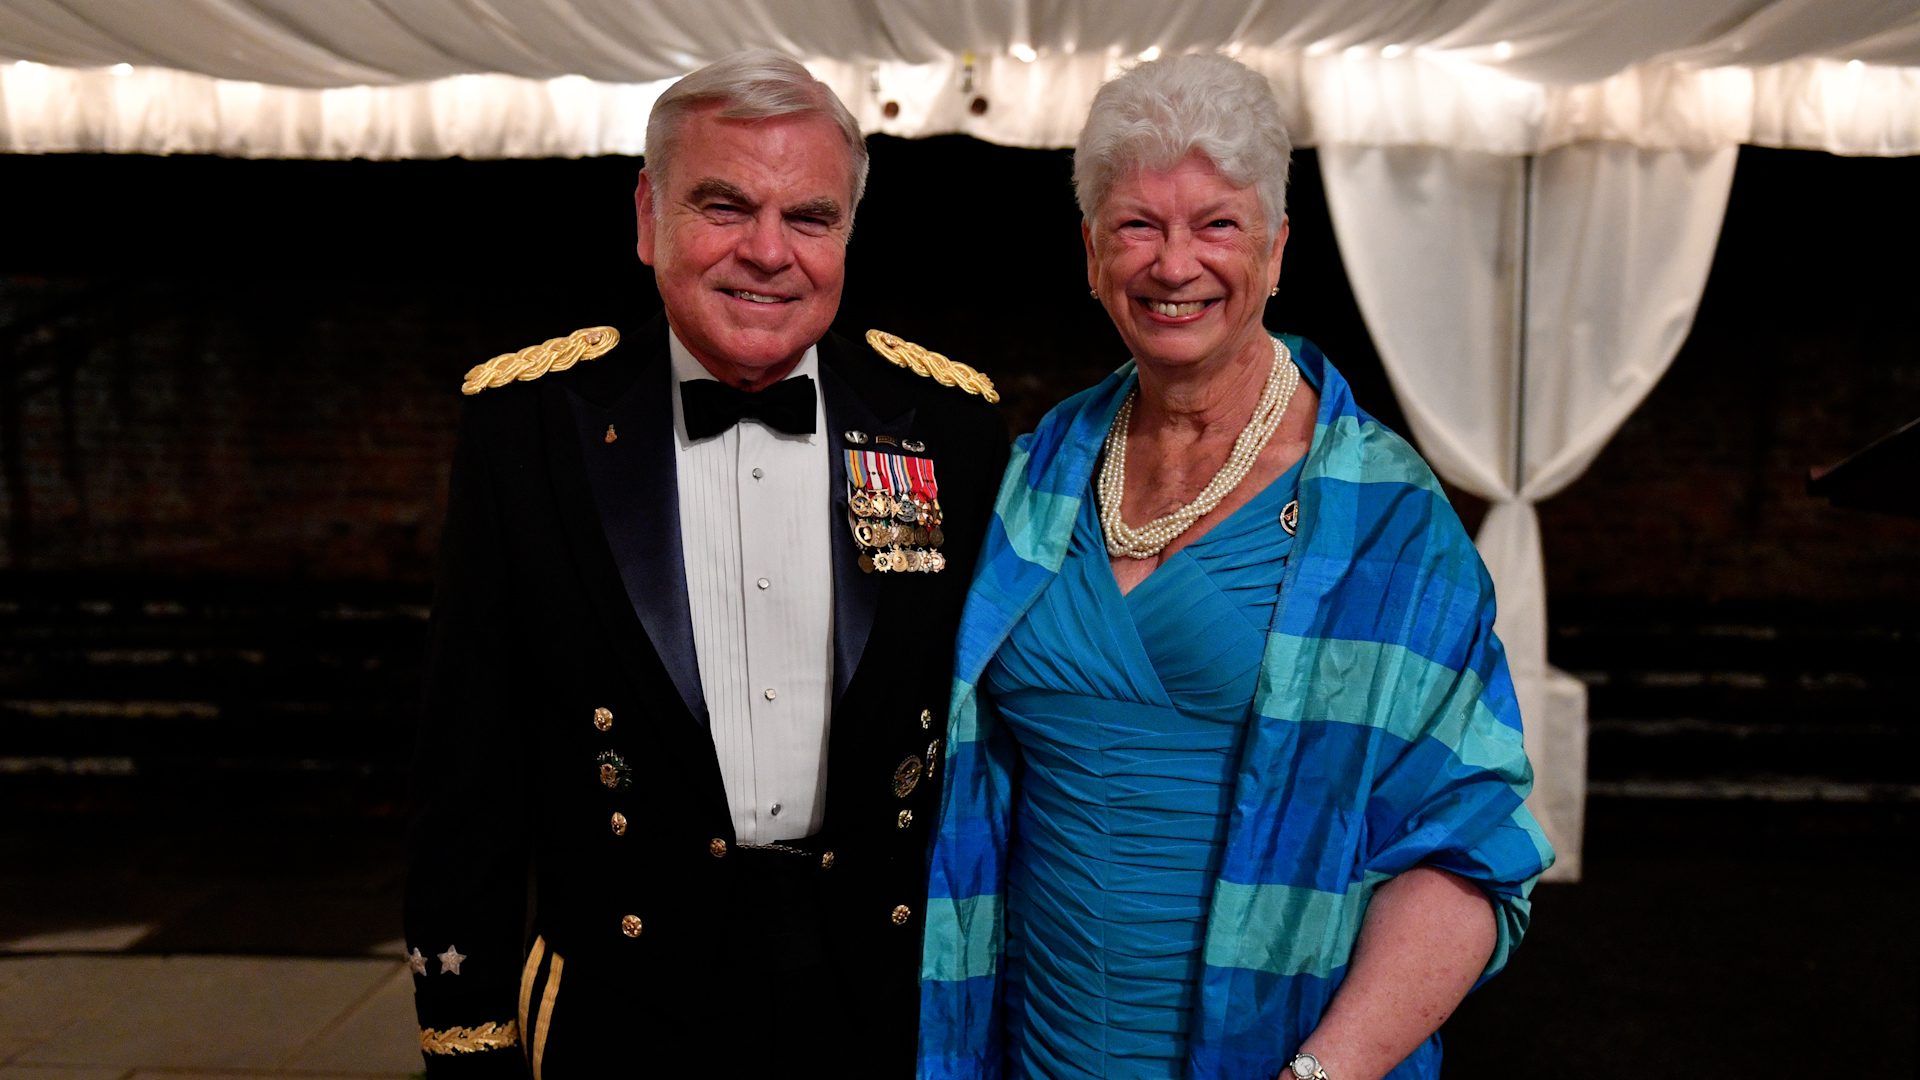 Gen. & Mrs. Peay Smiling